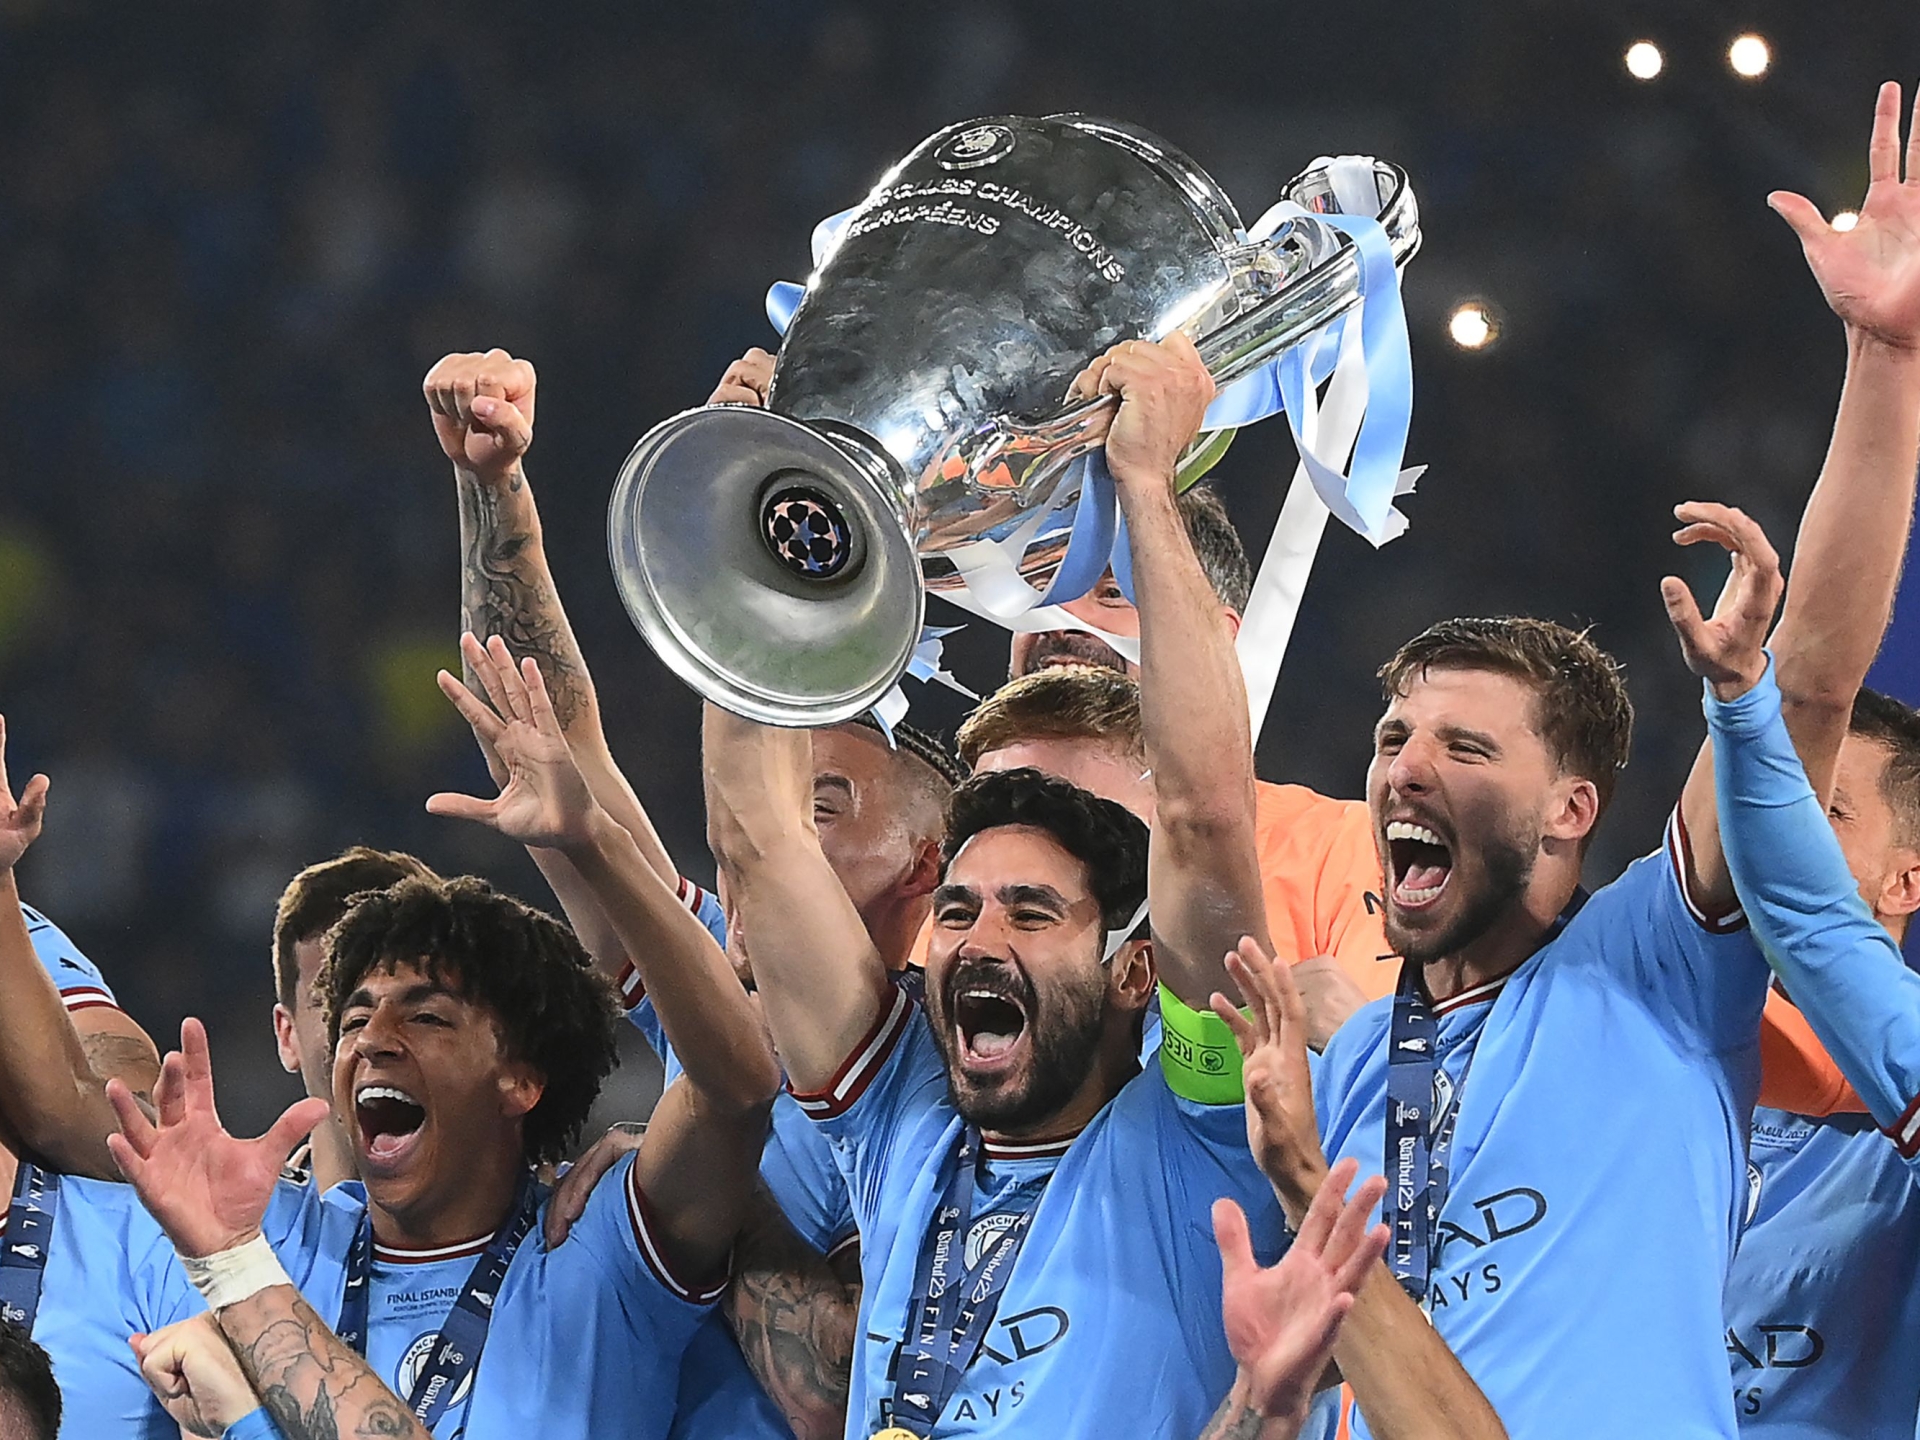 Man City pocket almost £300million in prize money after historic treble- winning season